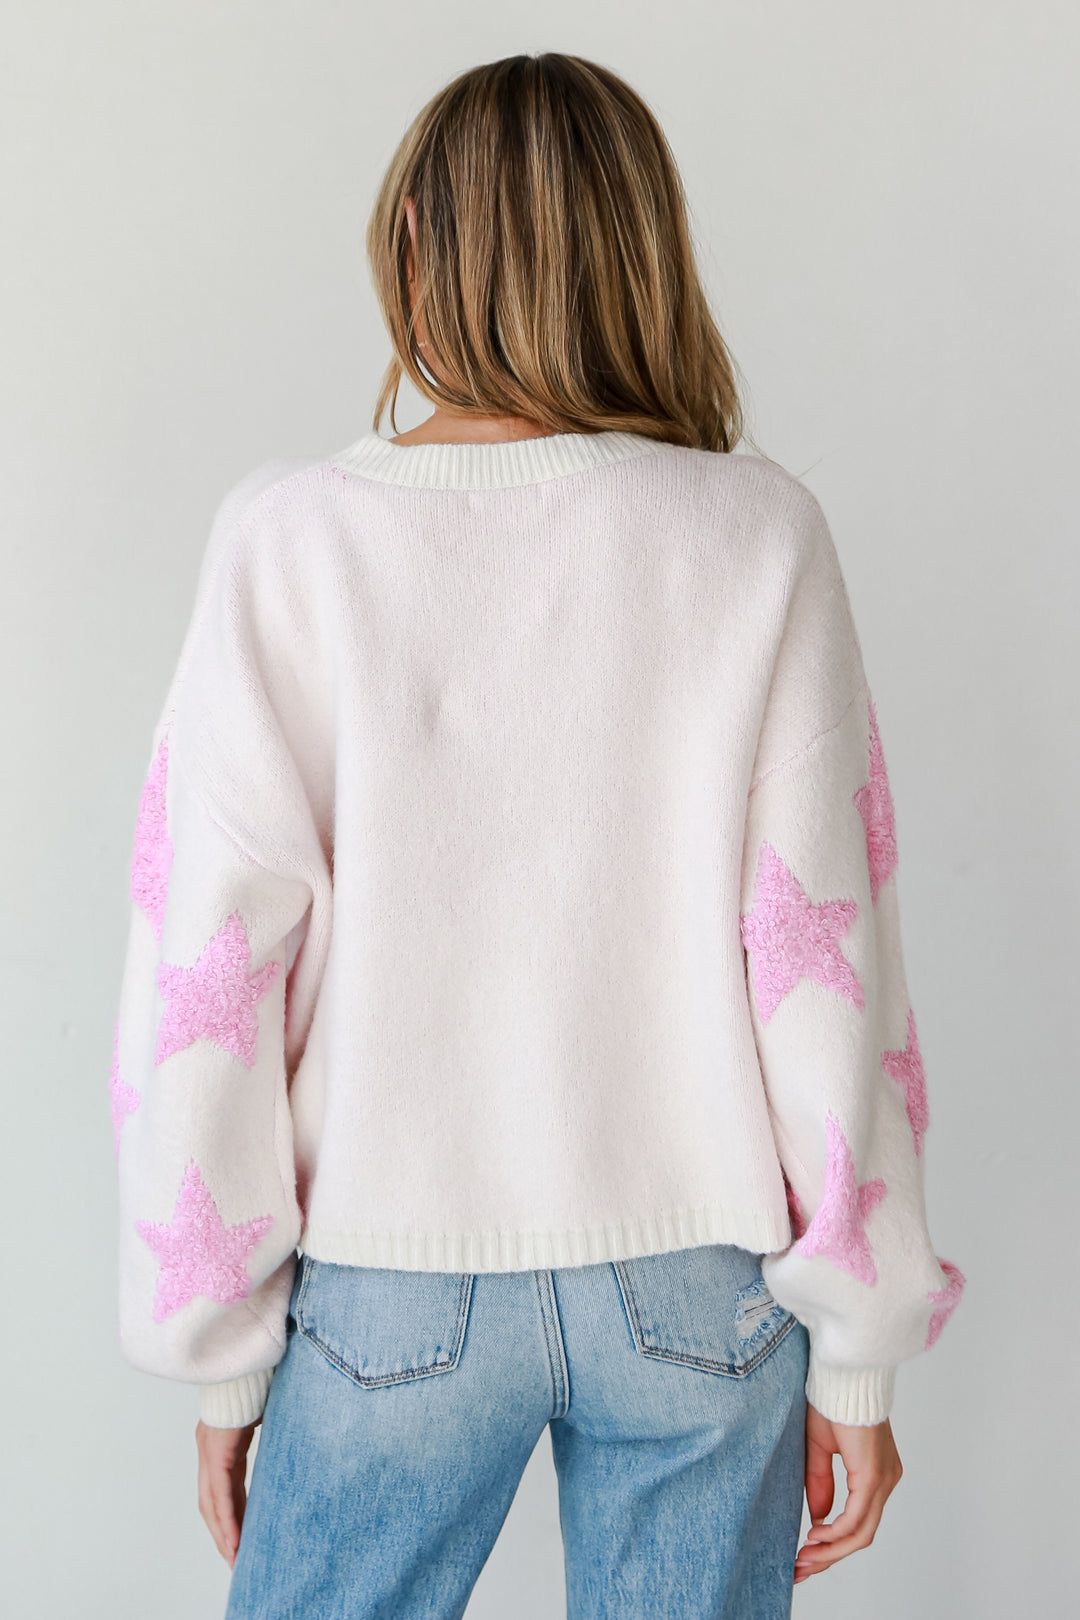 star sweater for women